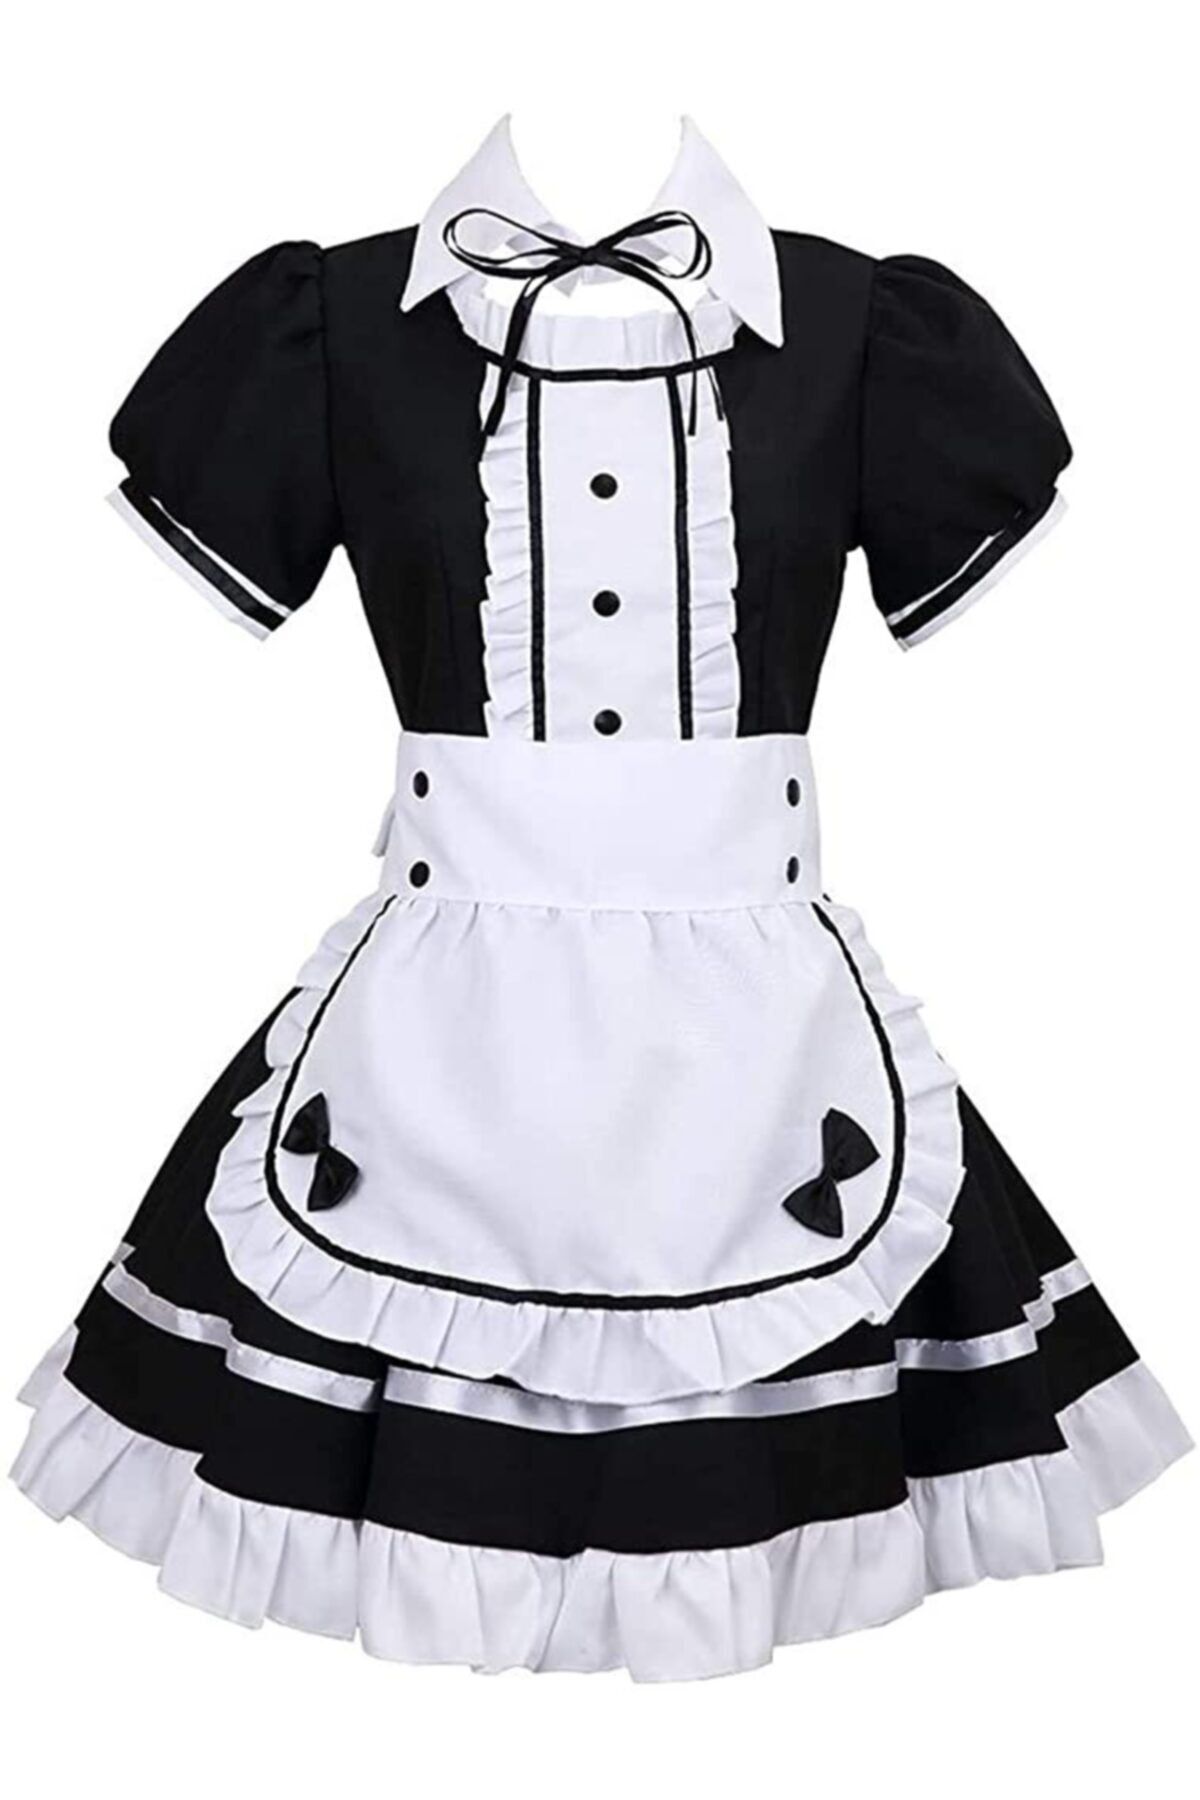 GALAXYBUTIQUE Anime Maid Dress Cosplay Özel Tasarım Hizmetçi Elbisesi